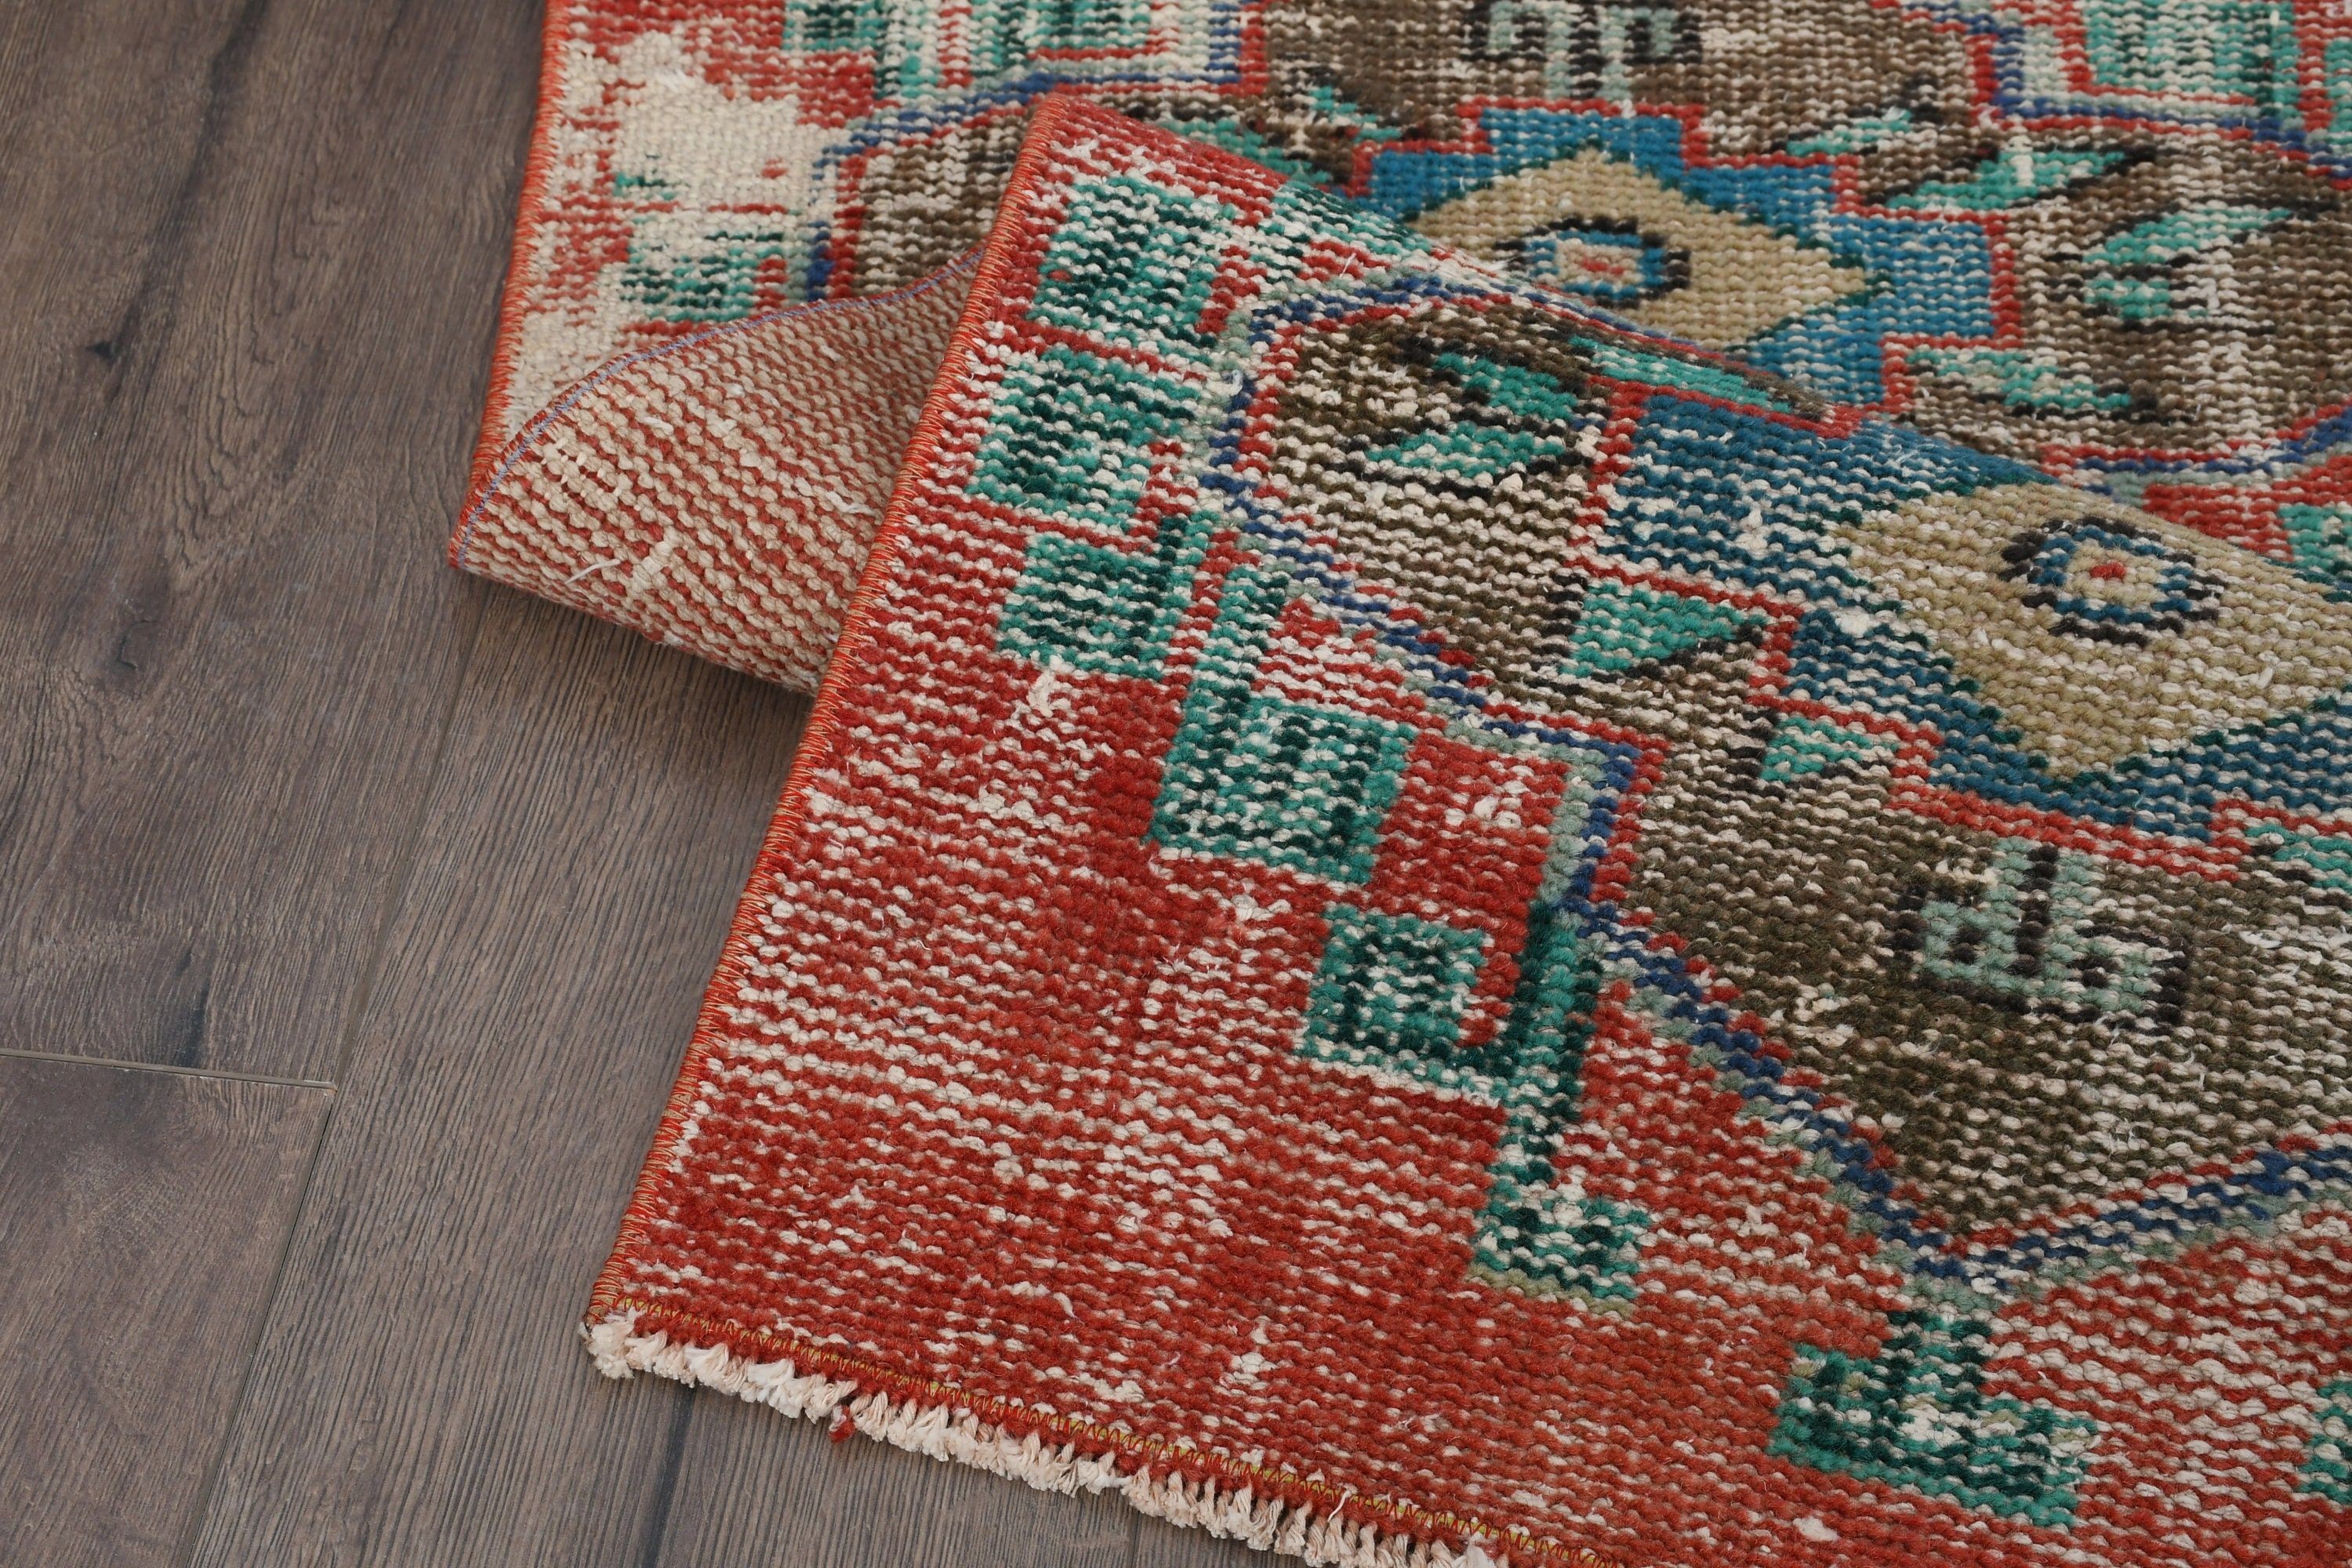 Turkish Rugs, Rugs for Door Mat, Bedroom Rug, Vintage Rug, Kitchen Rug, 2x3.3 ft Small Rug, Art Rug, Nursery Rug, Red Home Decor Rugs